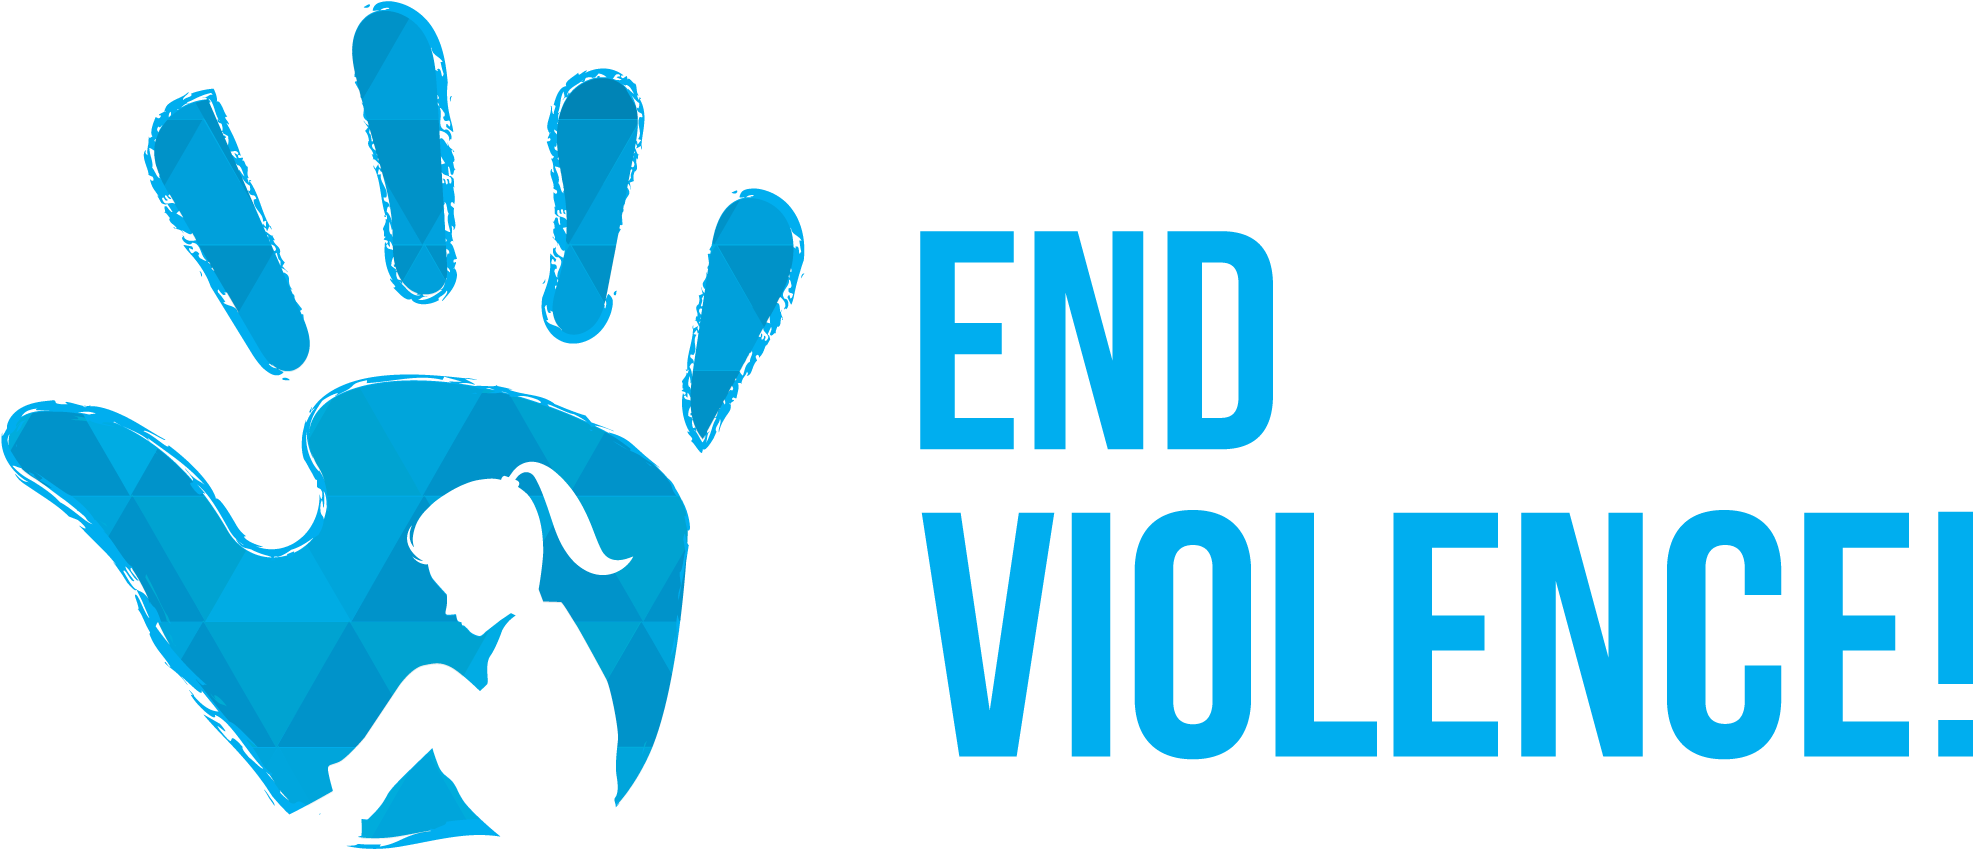 End Violence Campaign Logo PNG